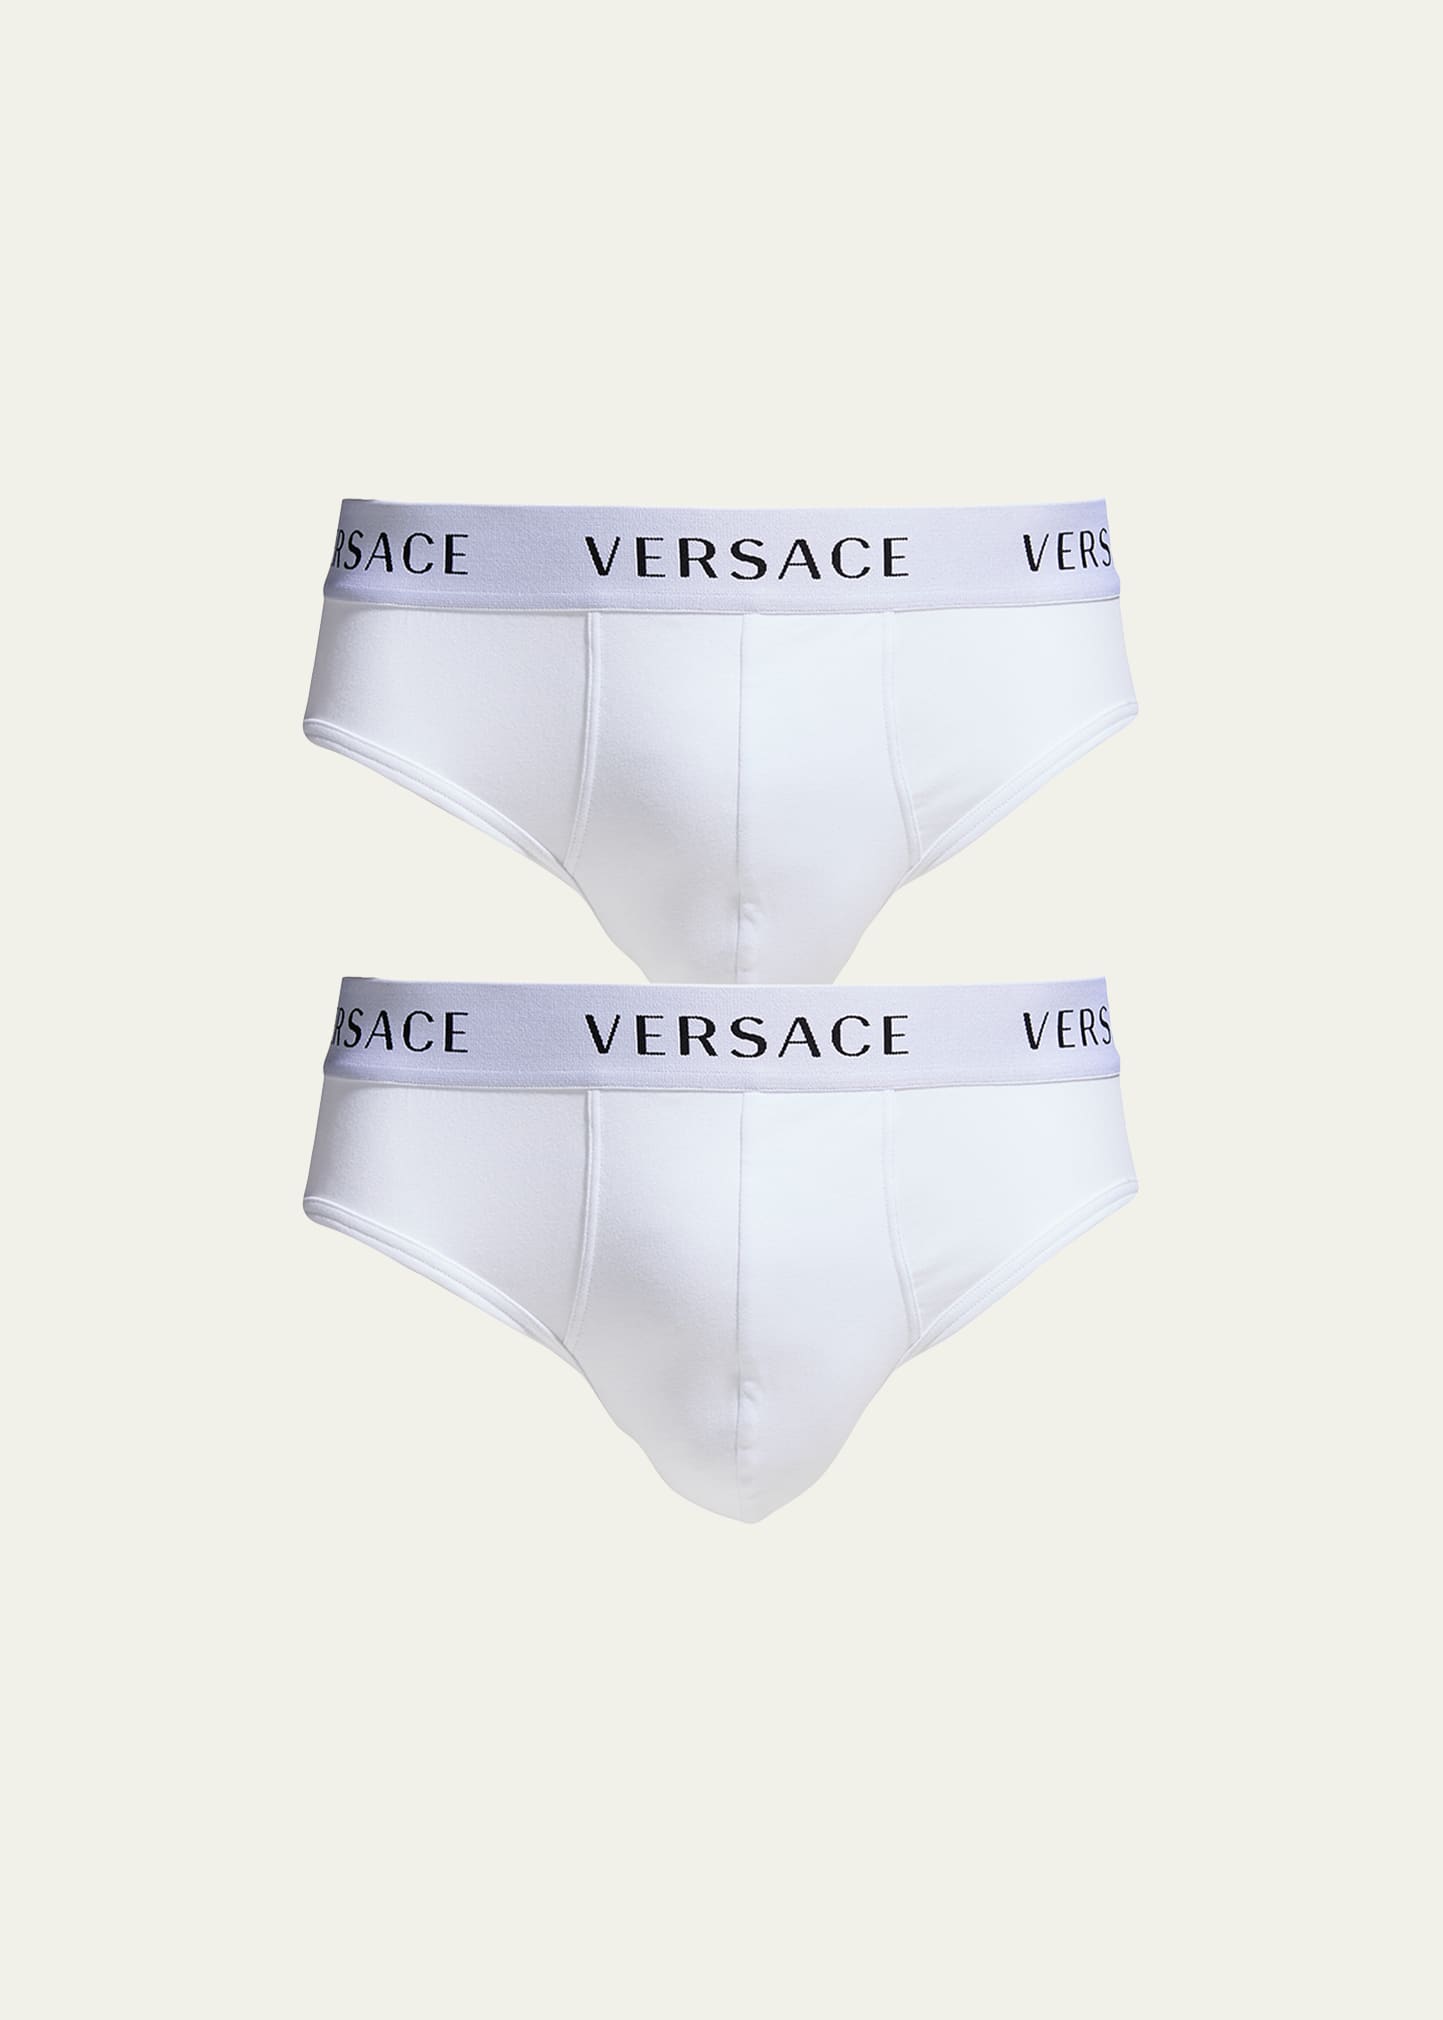 Versace Men's 2-pack Stretch Briefs In A94z White